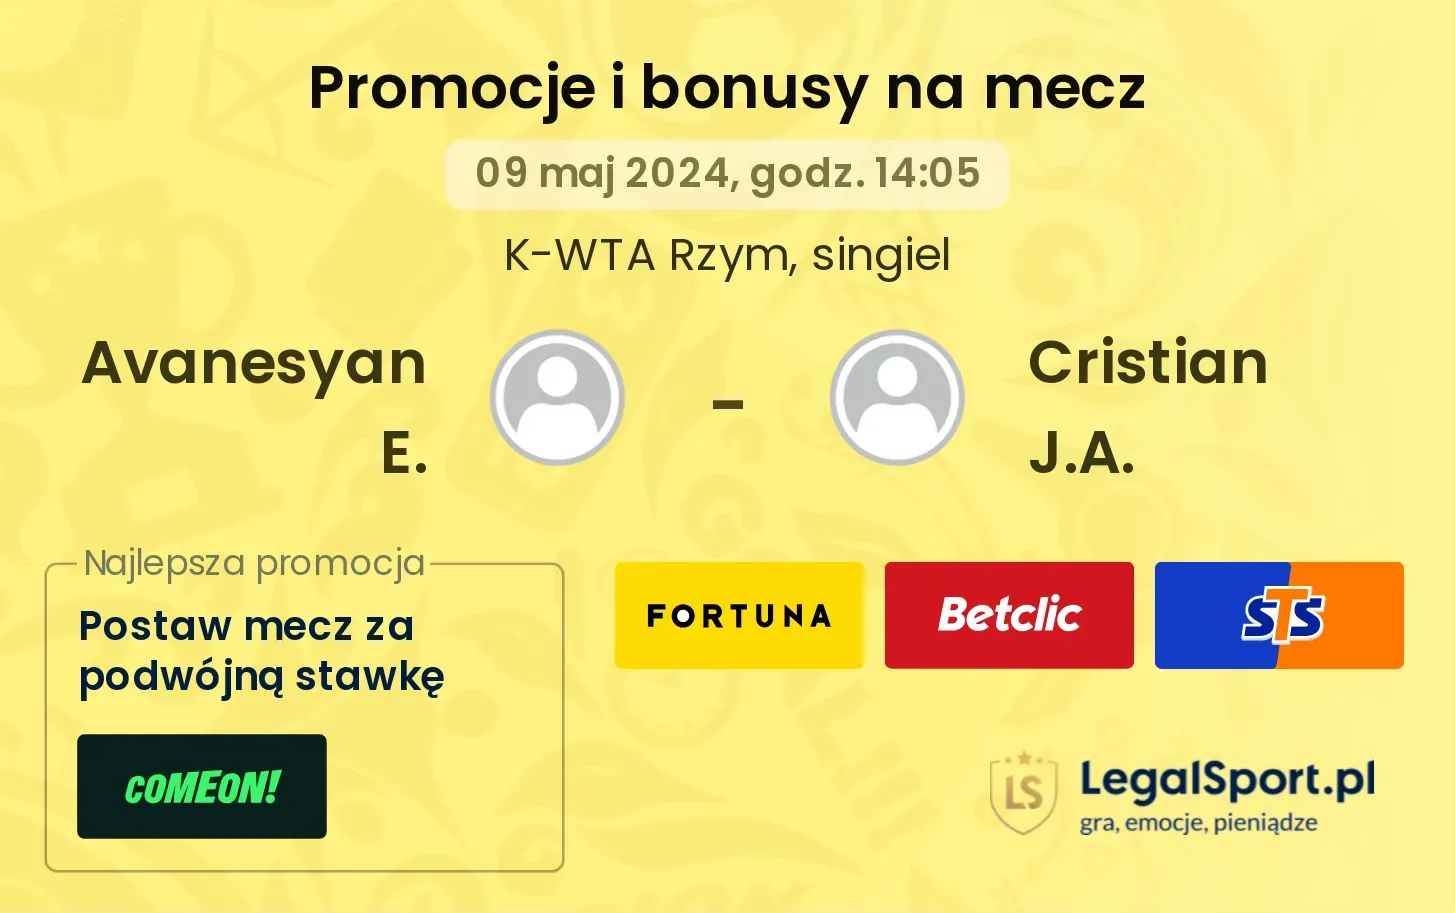 Avanesyan E. - Cristian J.A. promocje bonusy na mecz